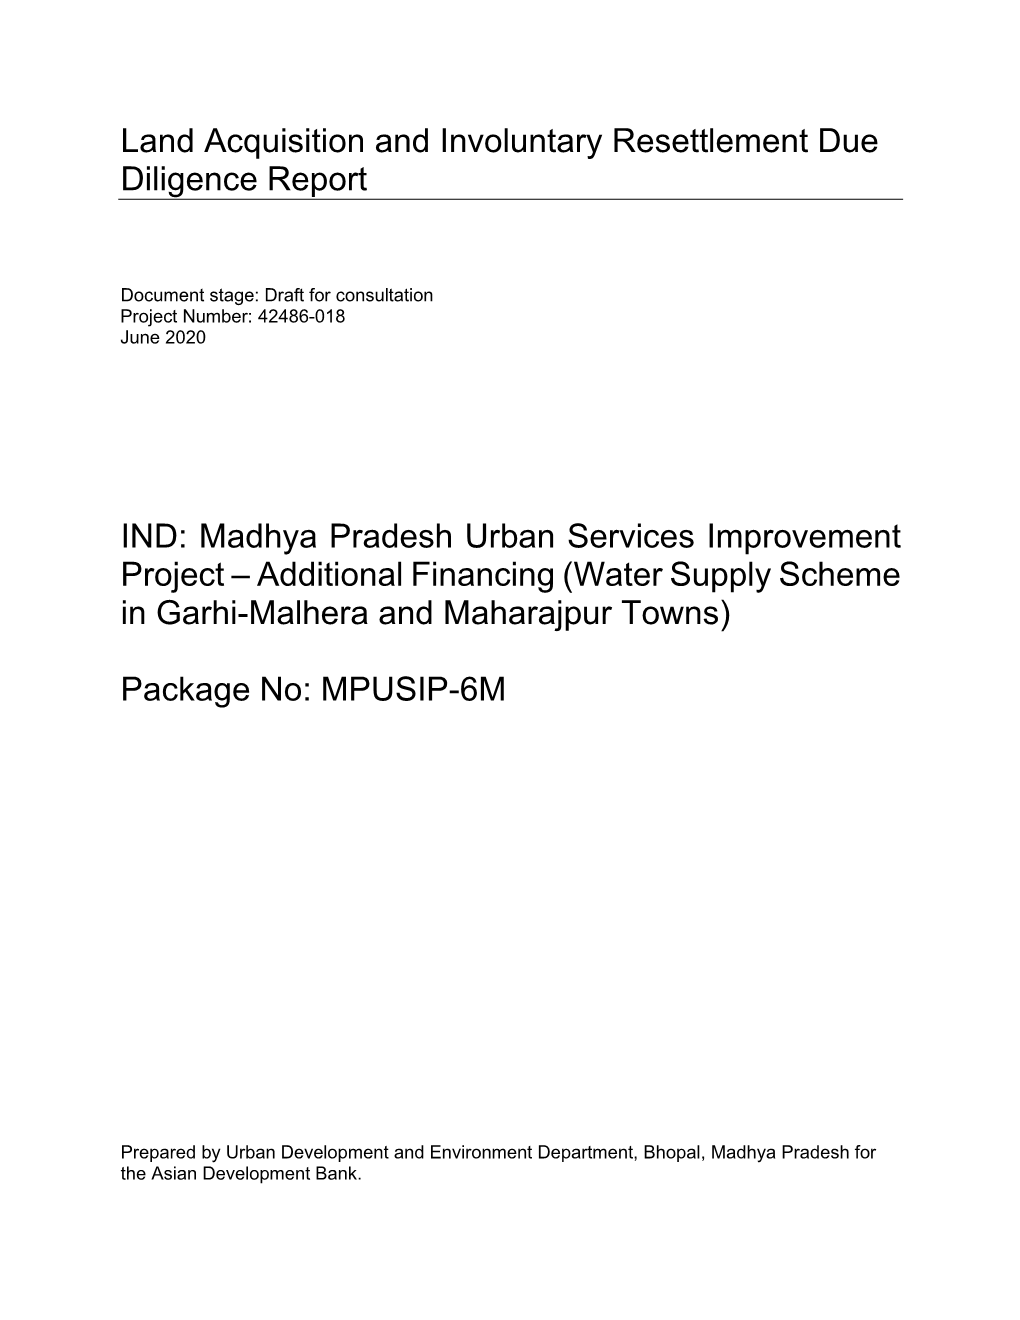 Madhya Pradesh Urban Services Improvement Project – Additional Financing (Water Supply Scheme in Garhi-Malhera and Maharajpur Towns)